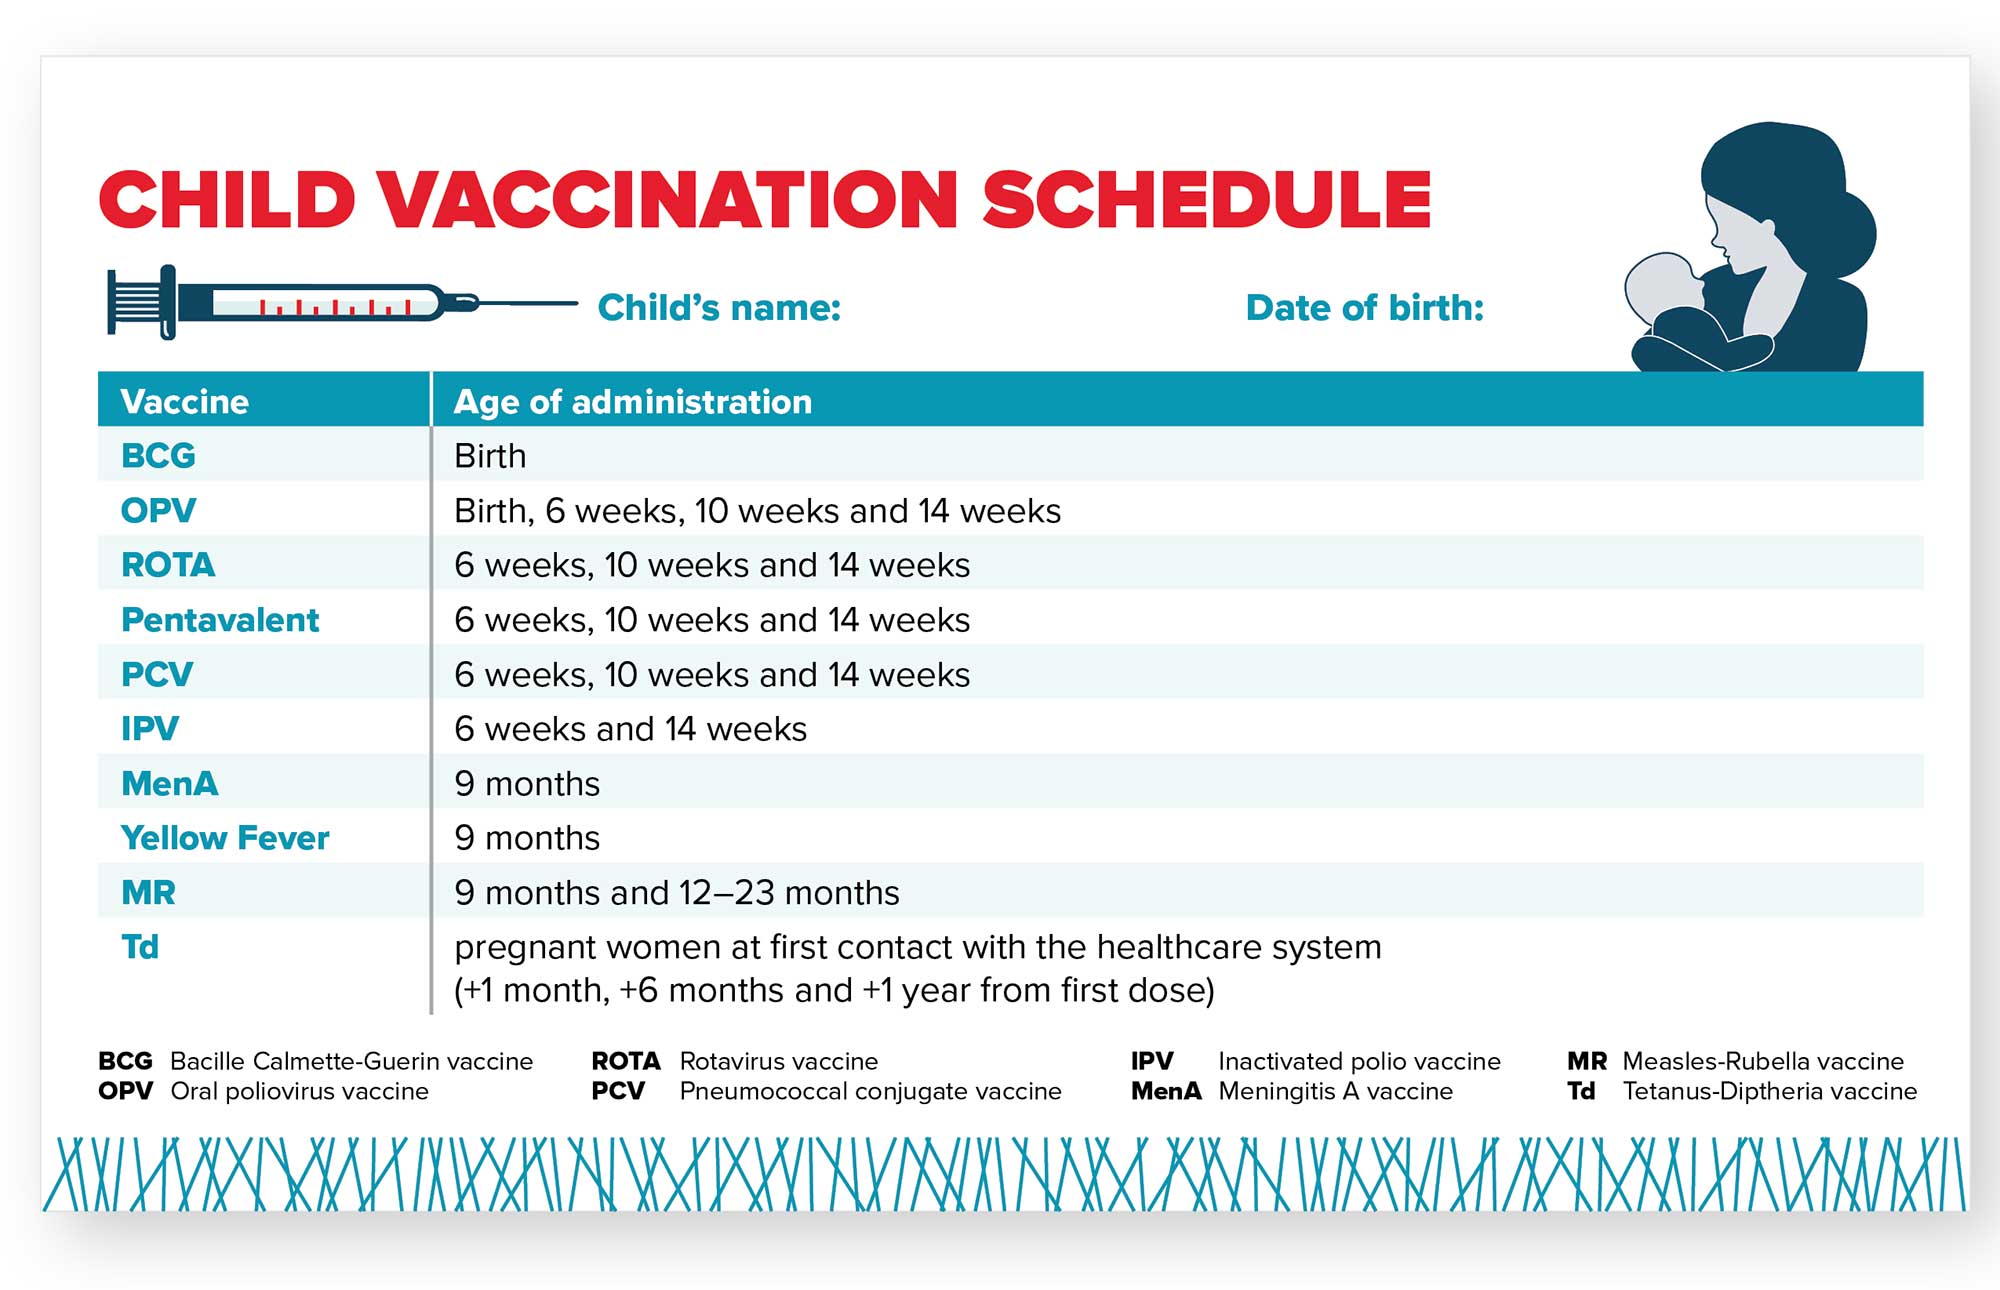 Figure 5. Mali Childhood Vaccination Schedule